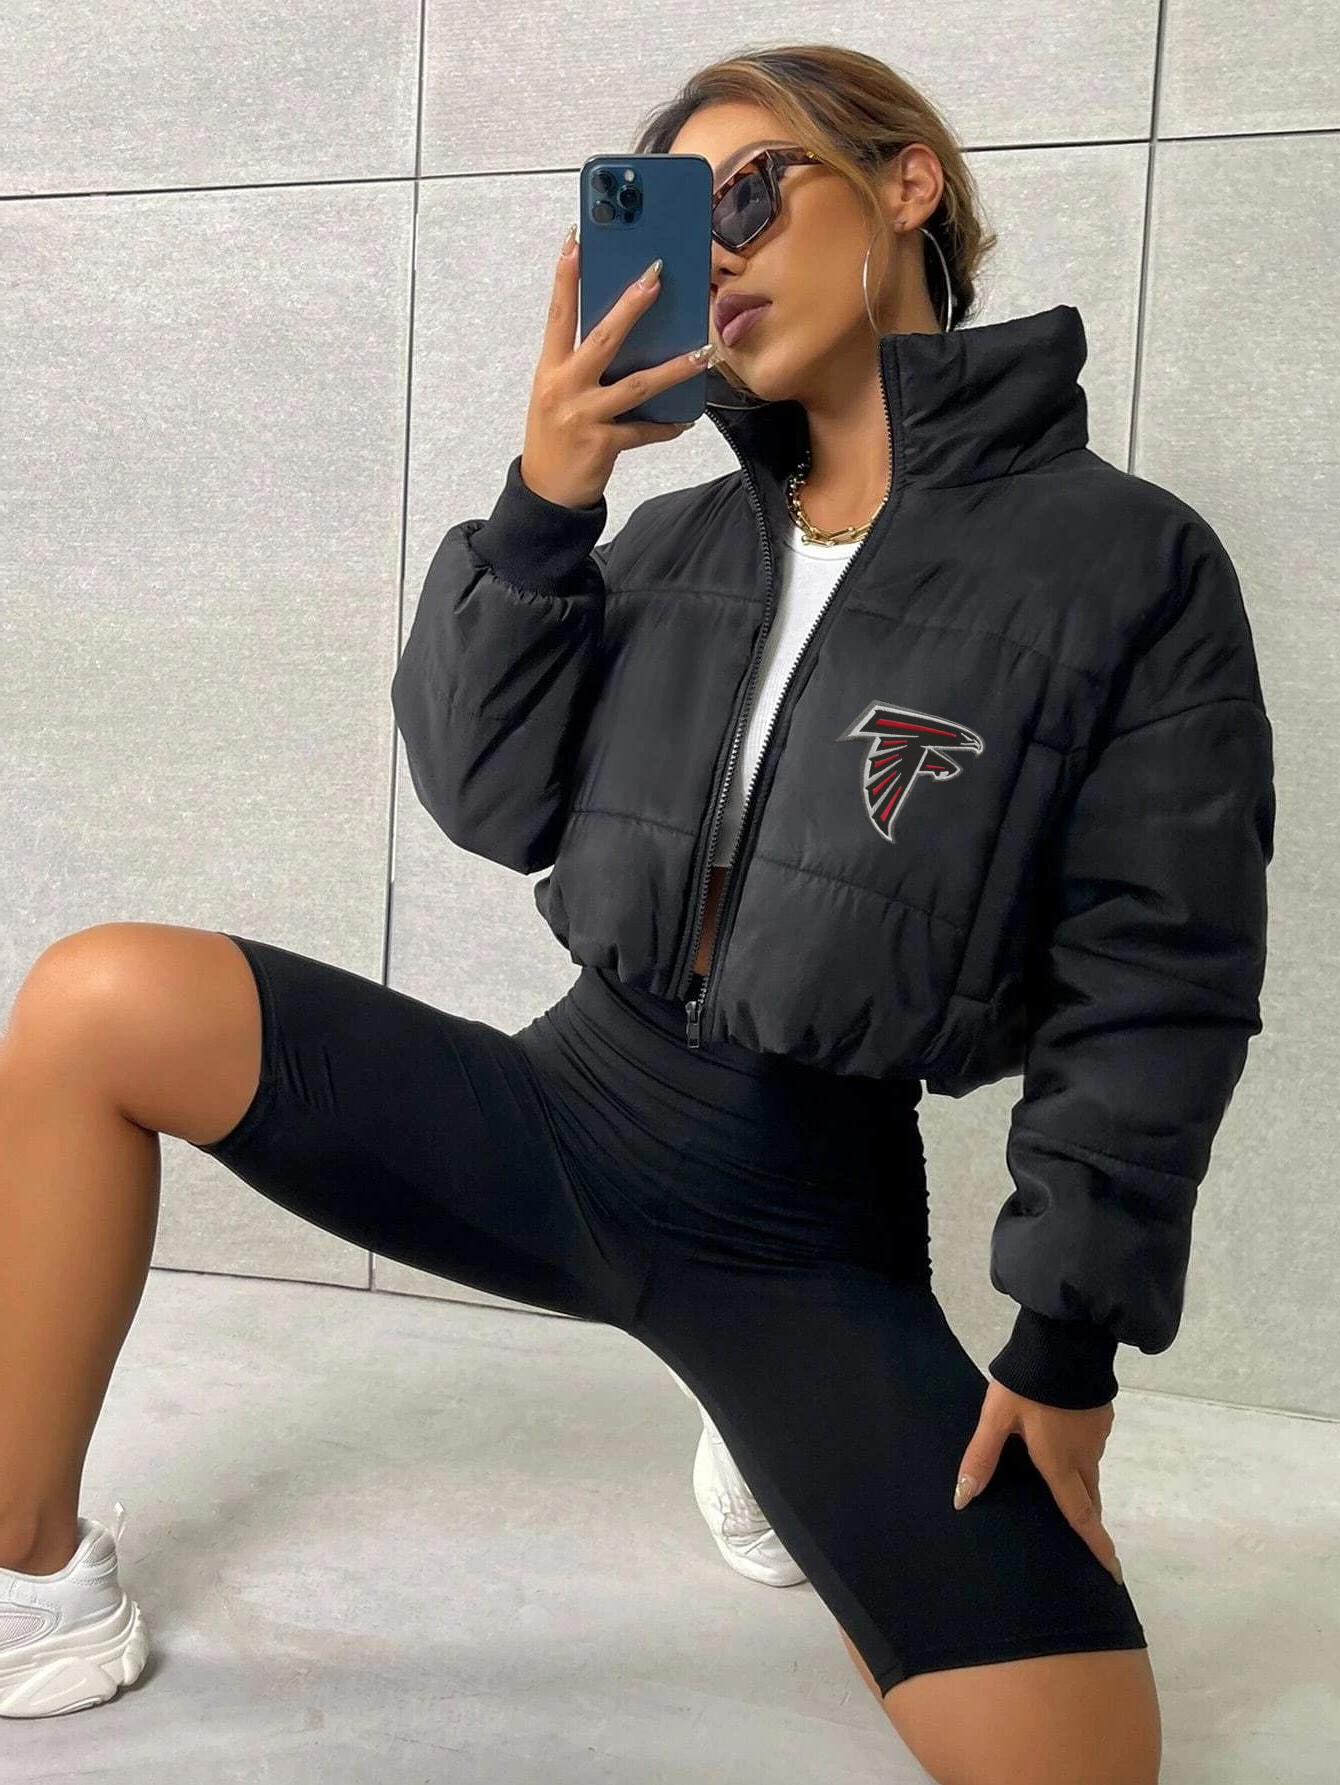 Atlanta Falcons Cropped Puffer Jacket - Cropped Winter Coat Women's Football NFL Apparel Black